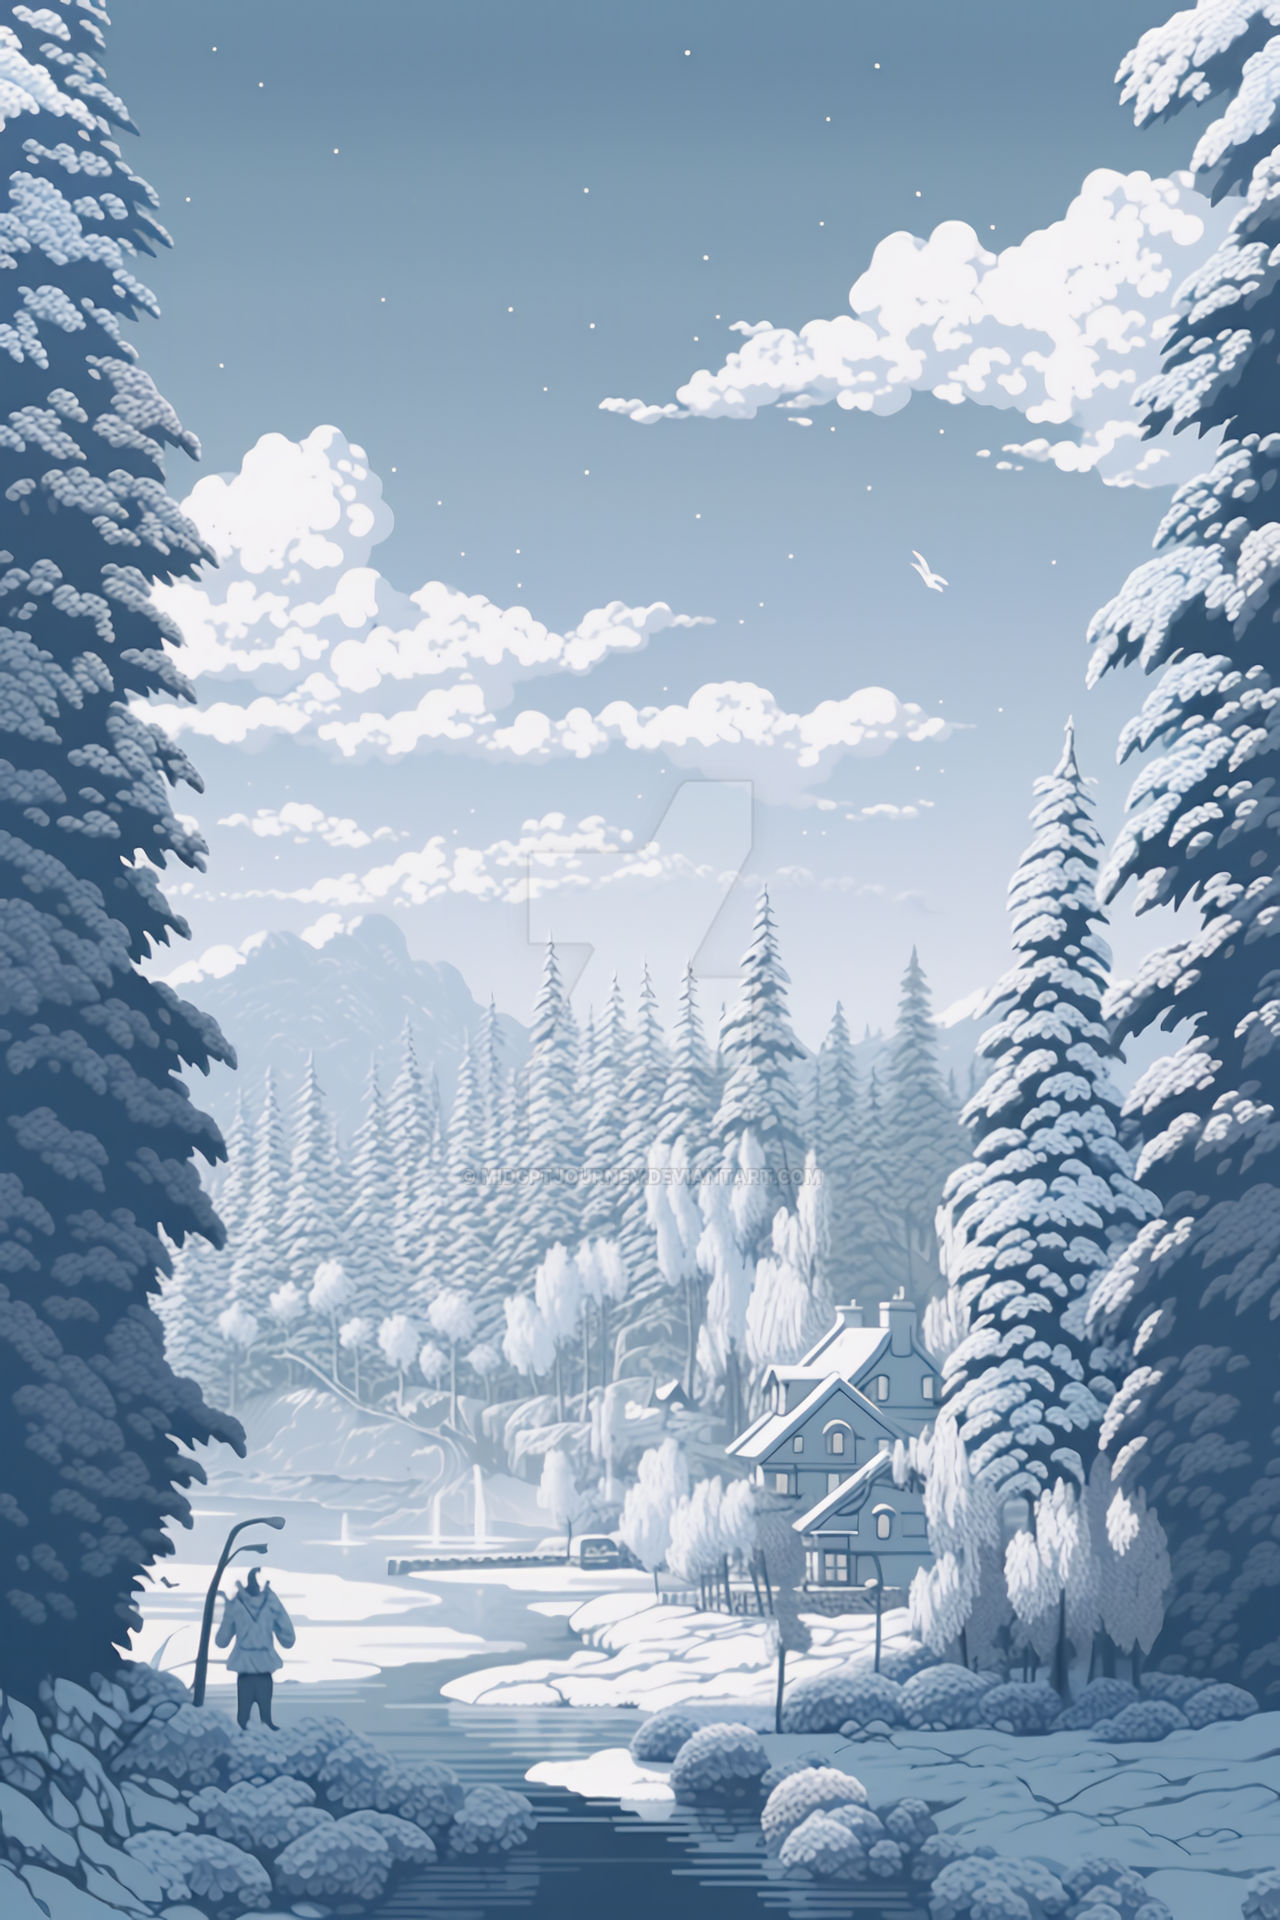 mesmerizing pixel snowscape scene by midgptjourney on DeviantArt